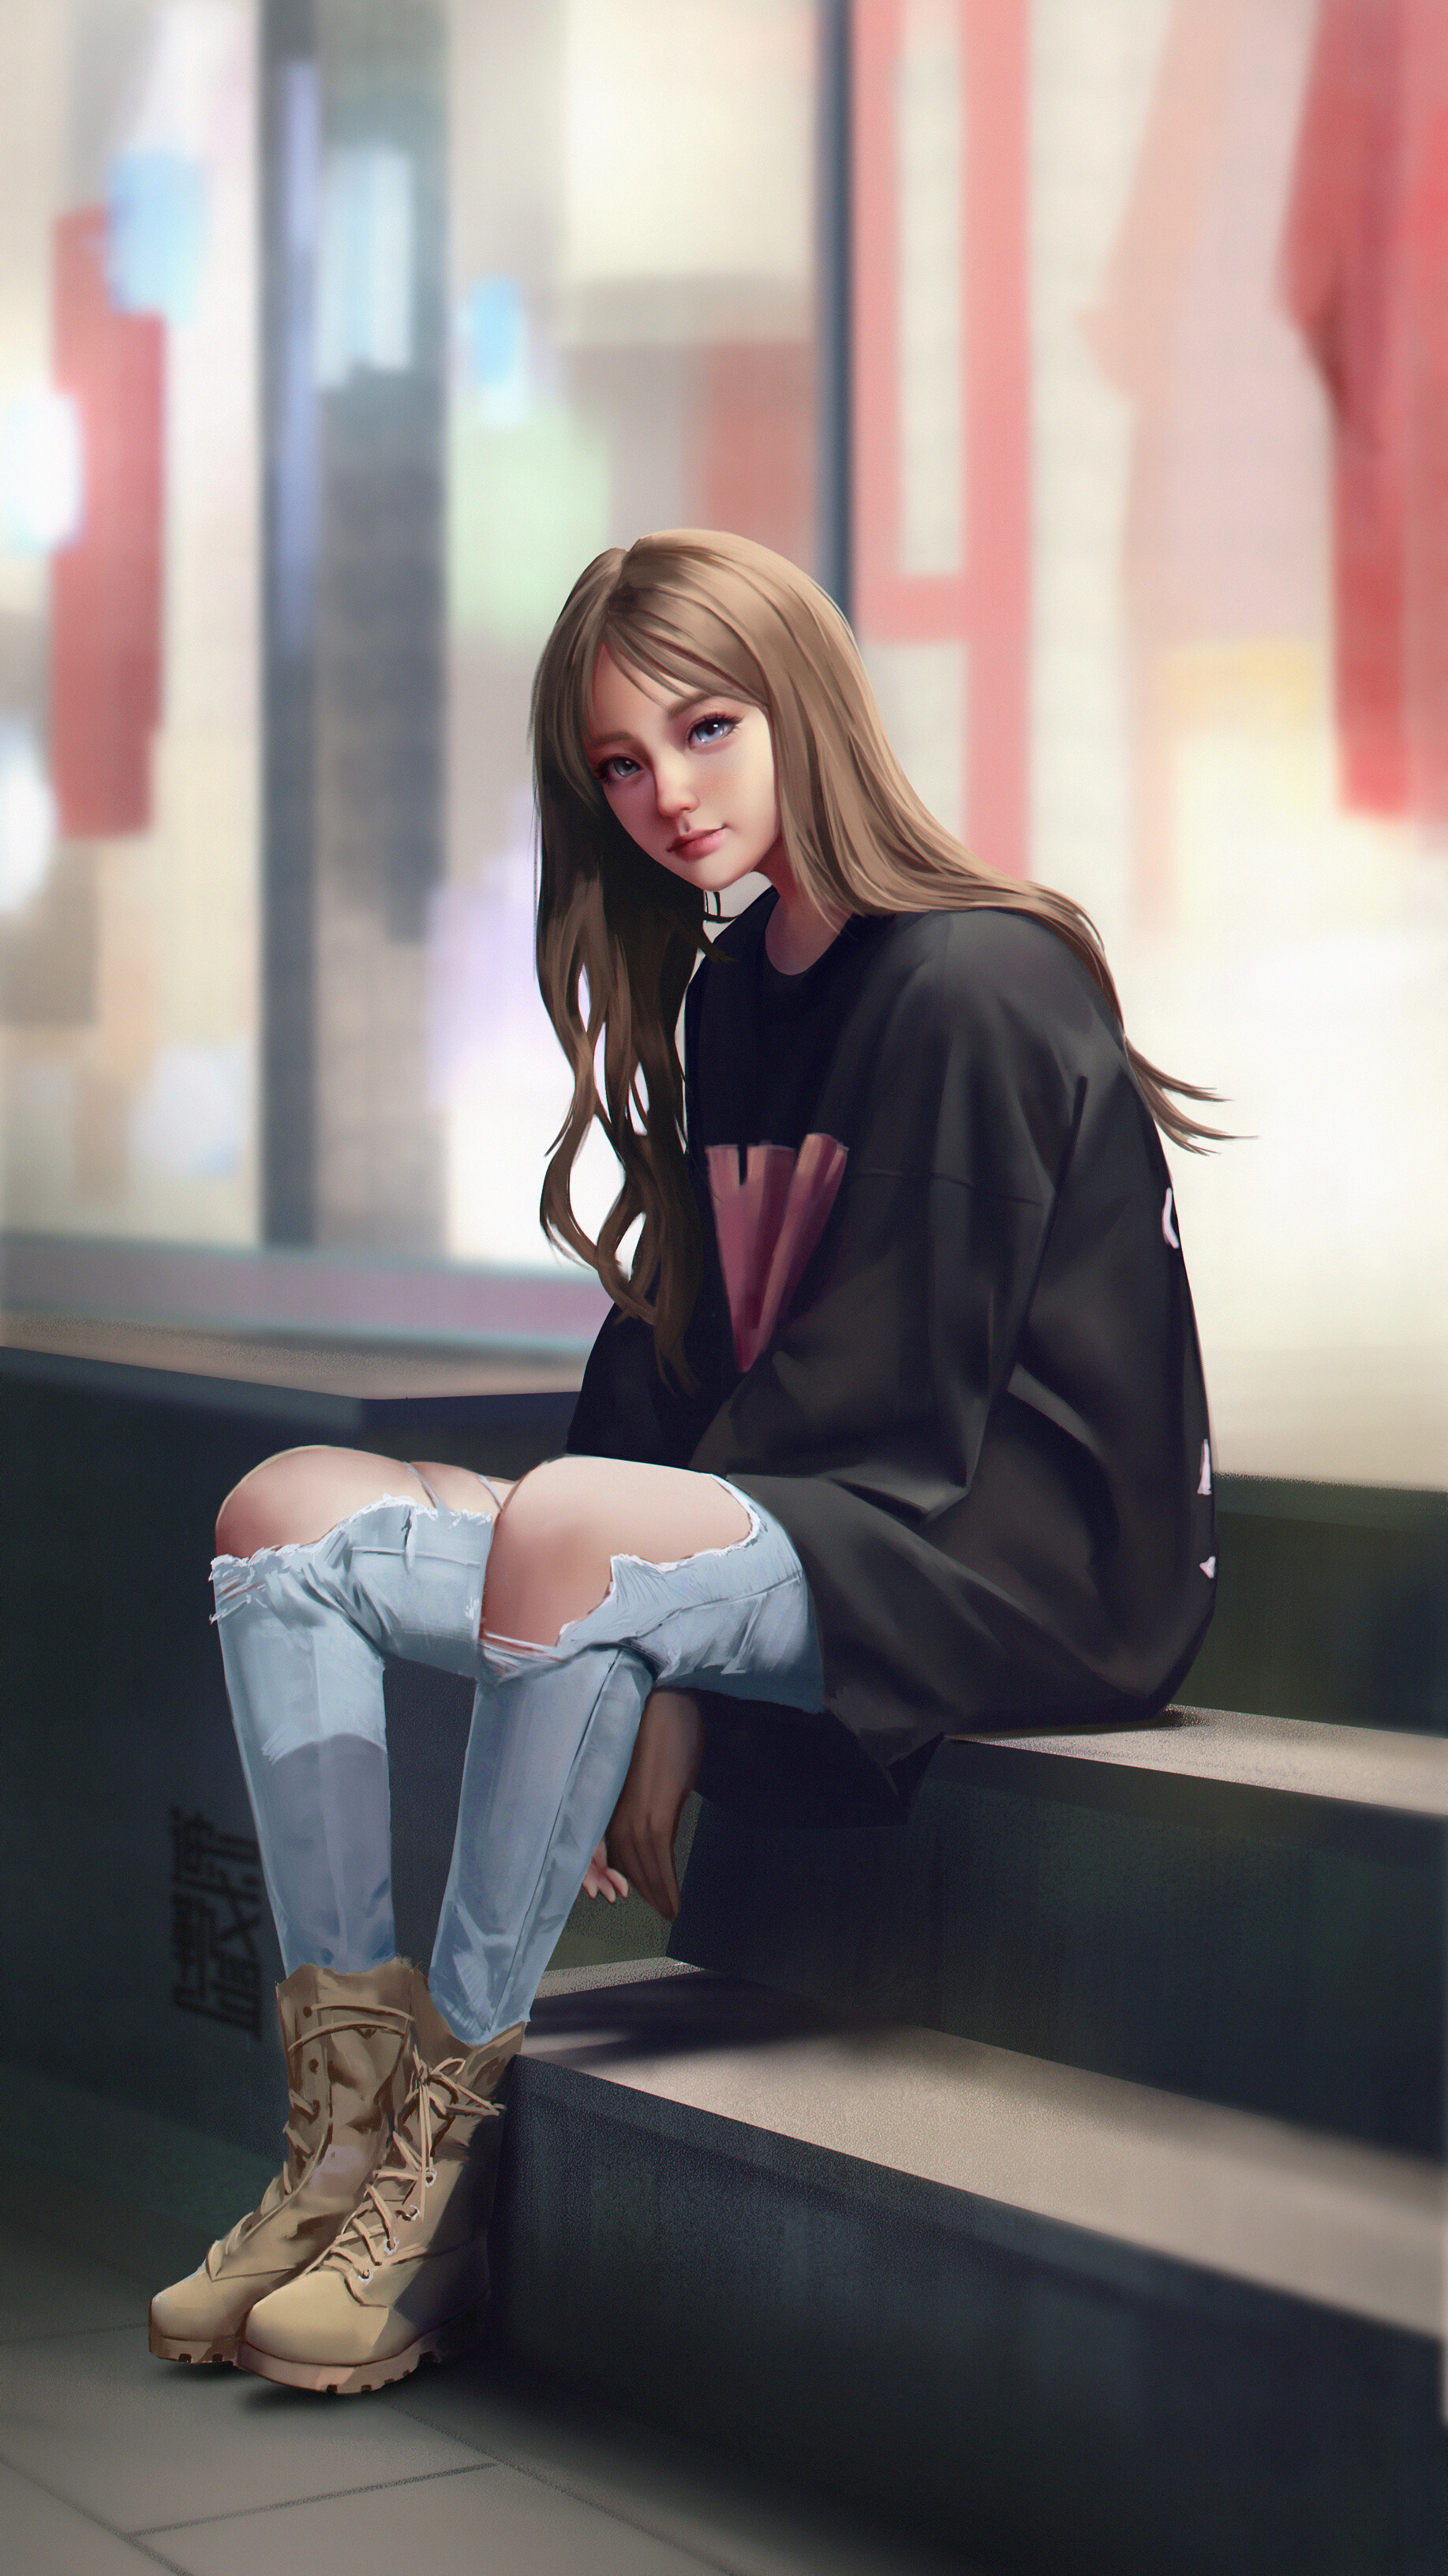 Xu Weili Illustration Women Pants Digital Art Ladders Long Hair Sitting Boots Black Top Torn Jeans S 1835x3264